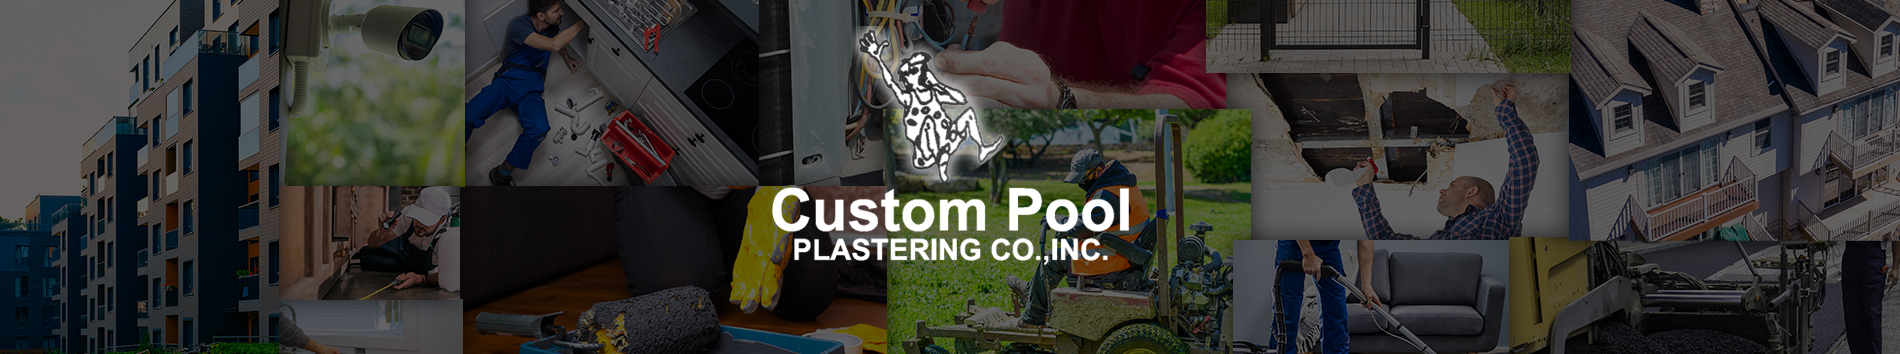 Custom Pool Plastering Co.